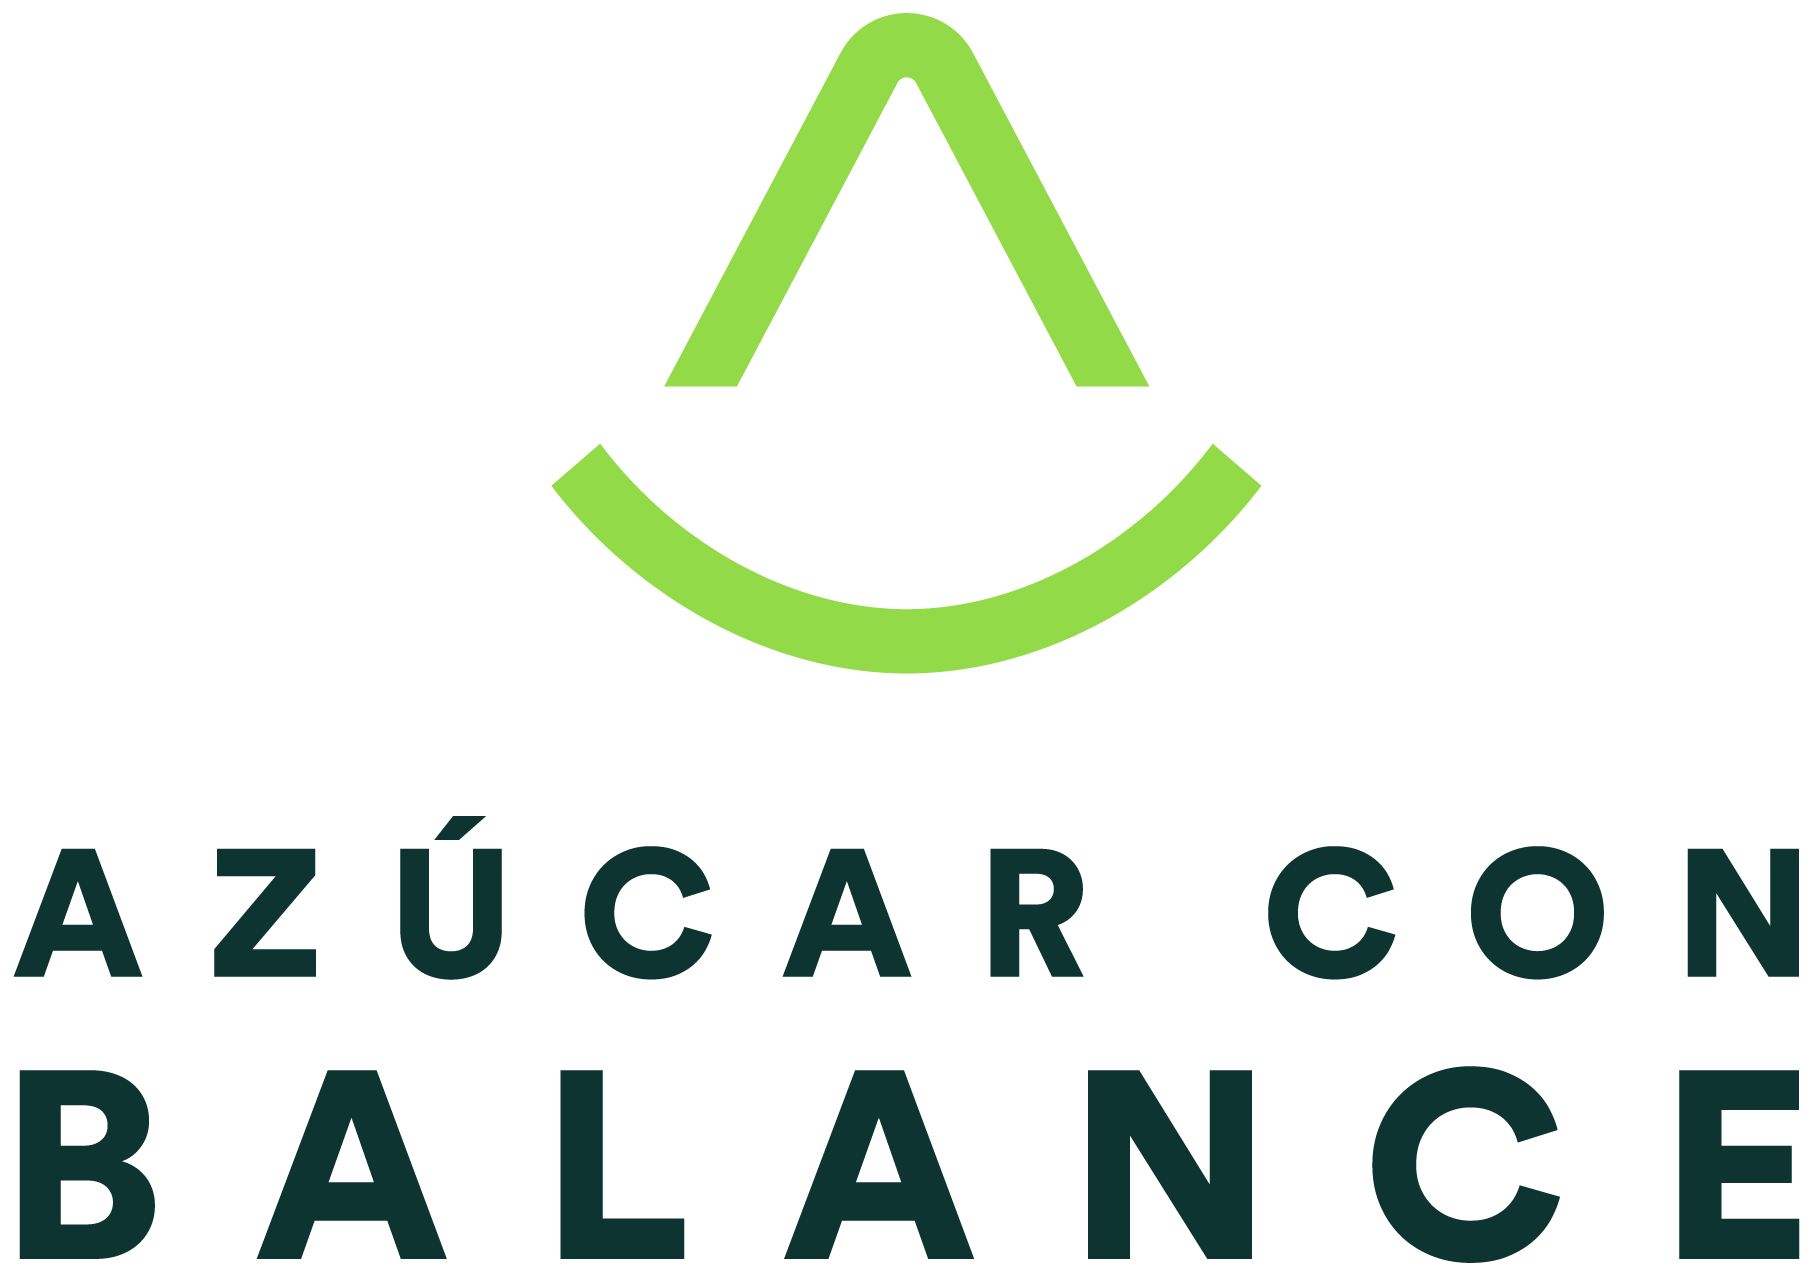 (c) Azucarconbalance.org